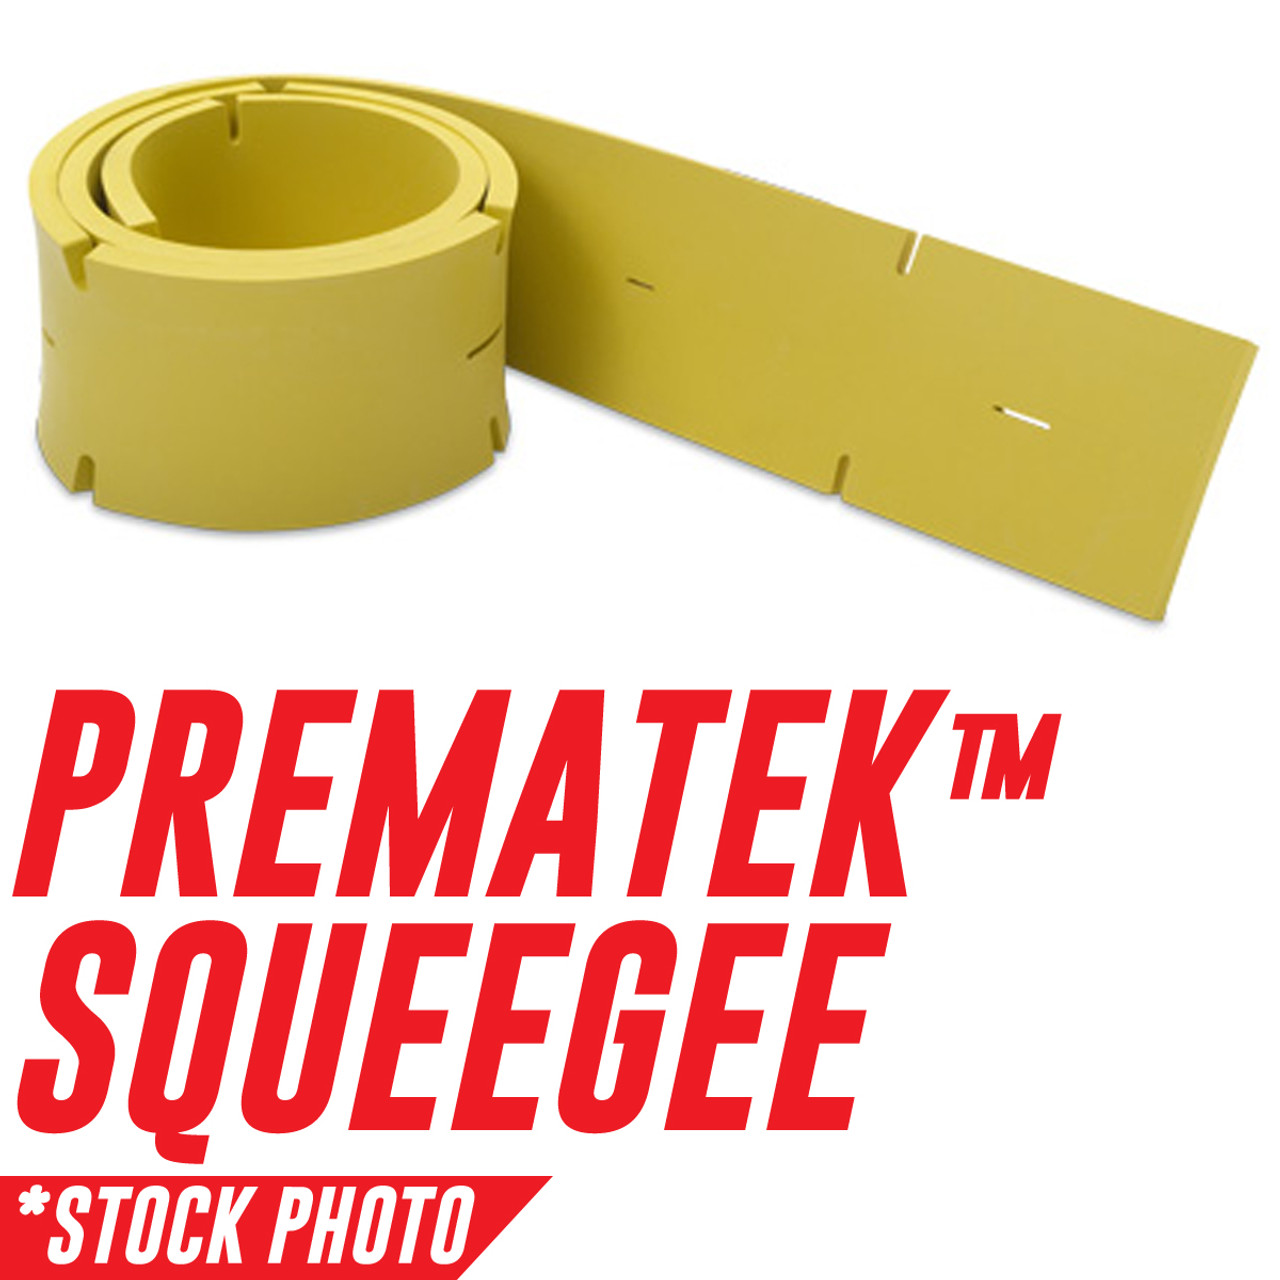 36-754L: Squeegee, Rear 36", Prematek fits Factory Cat Models Mag-HD, Micro-HD, Mini-HD, Pilot-HD